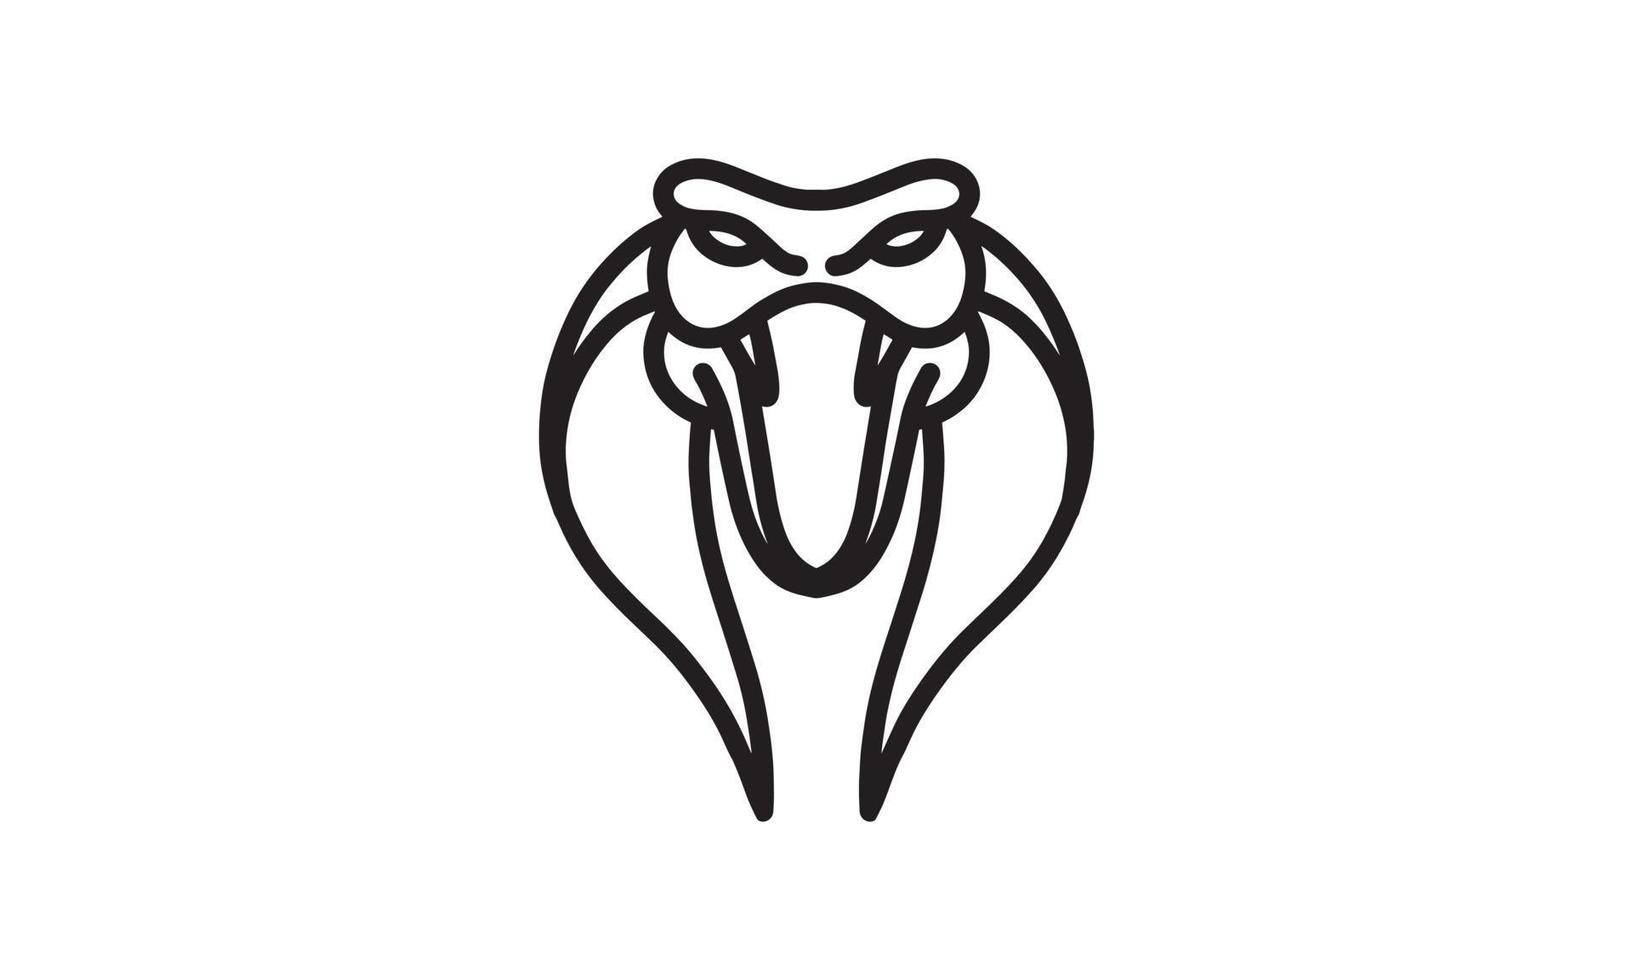 Kobra-Vektor-Linie-Symbol, Tierkopf-Vektor-Linienkunst, isolierte Tierillustration für Logo desain vektor